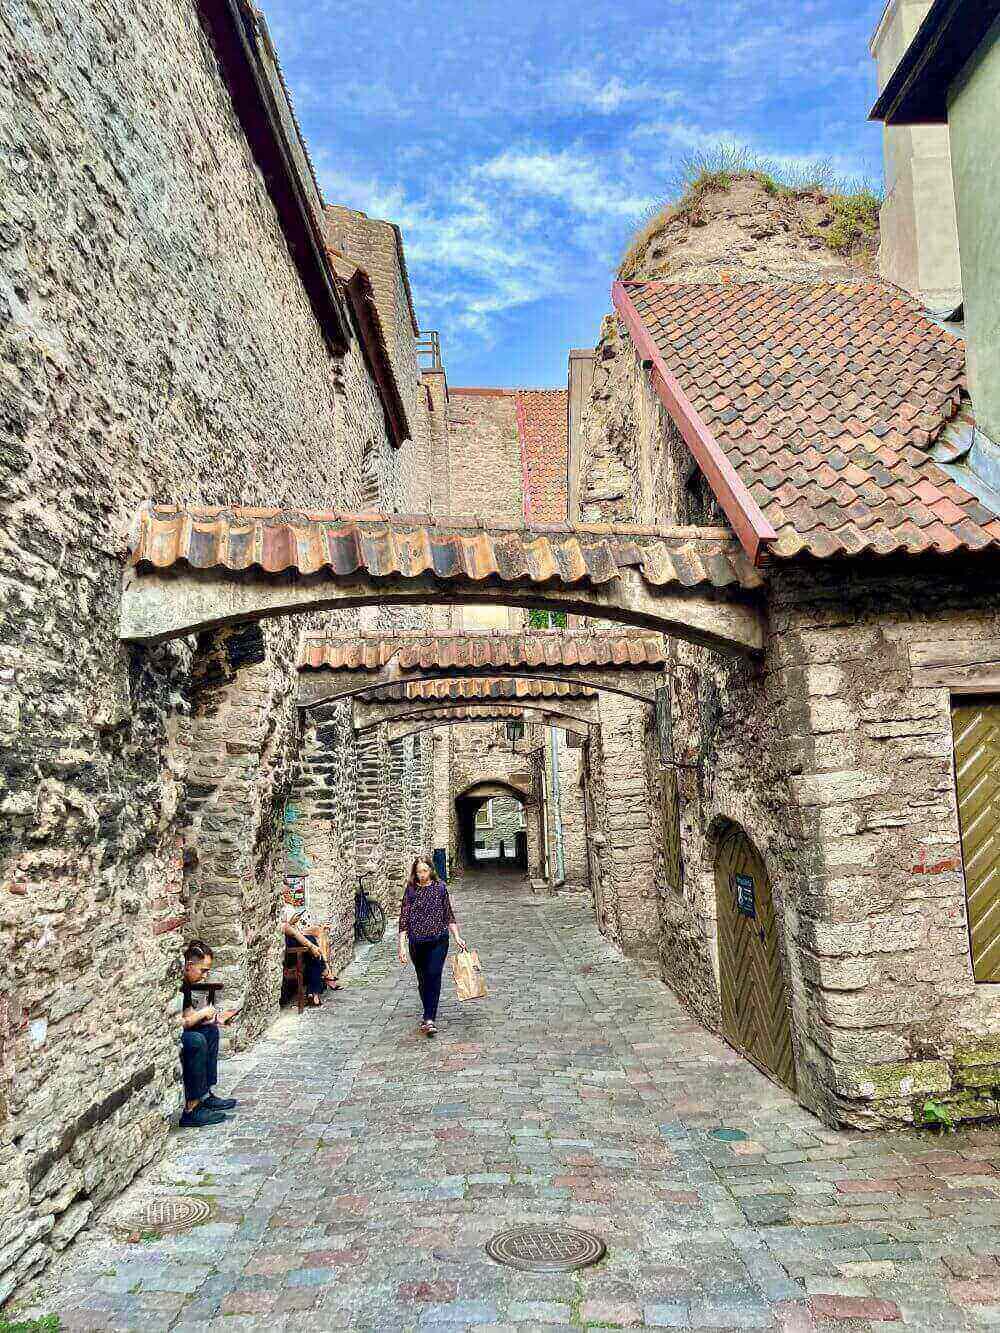 alleyway in the vanalinn old town district of tallinn